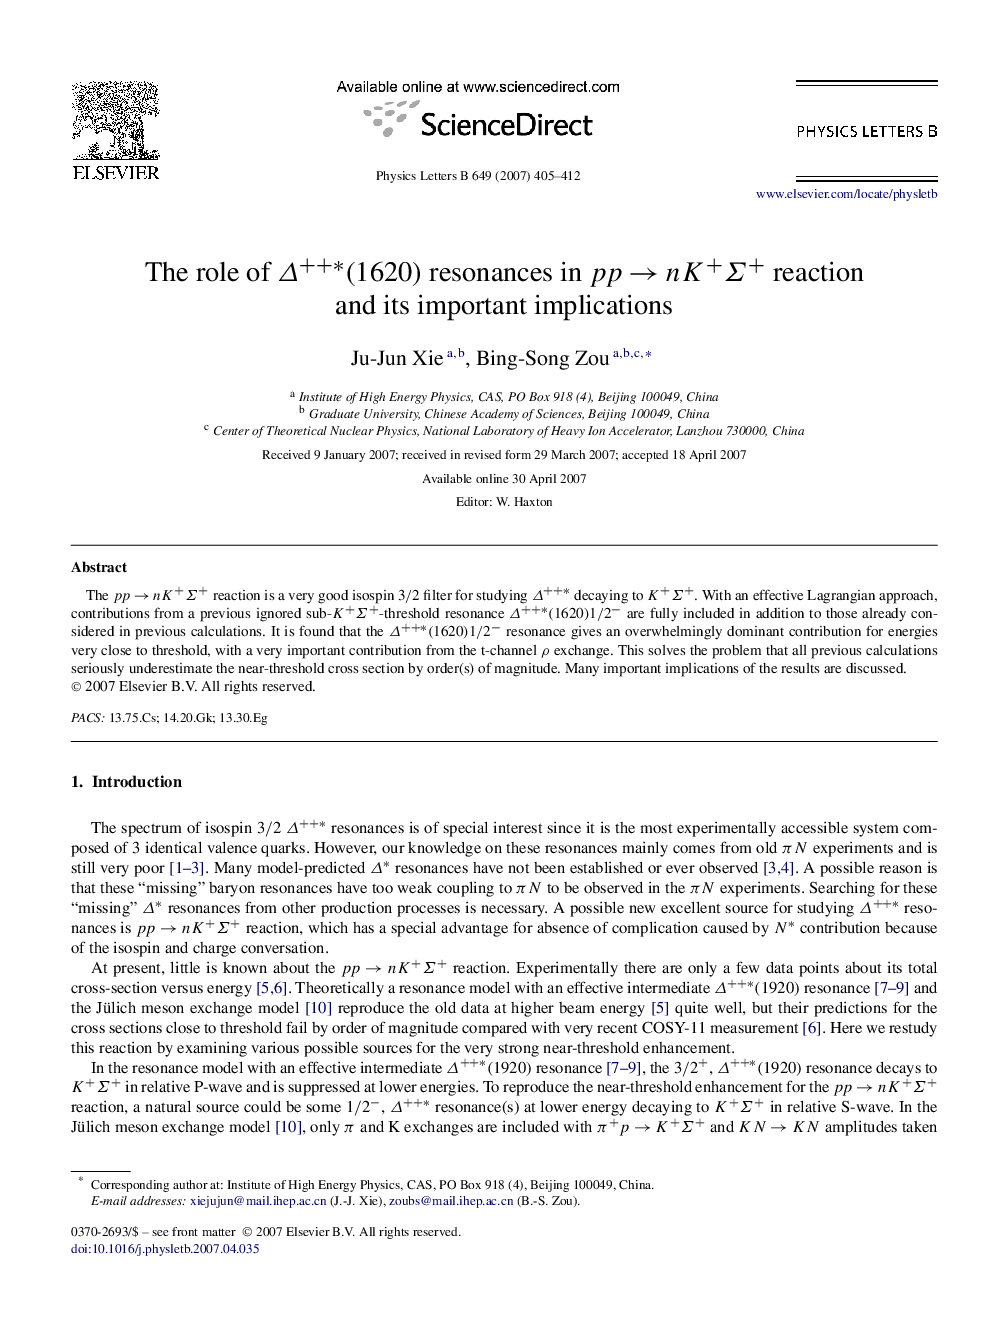 The role of Î++â(1620) resonances in ppânK+Î£+ reaction and its important implications